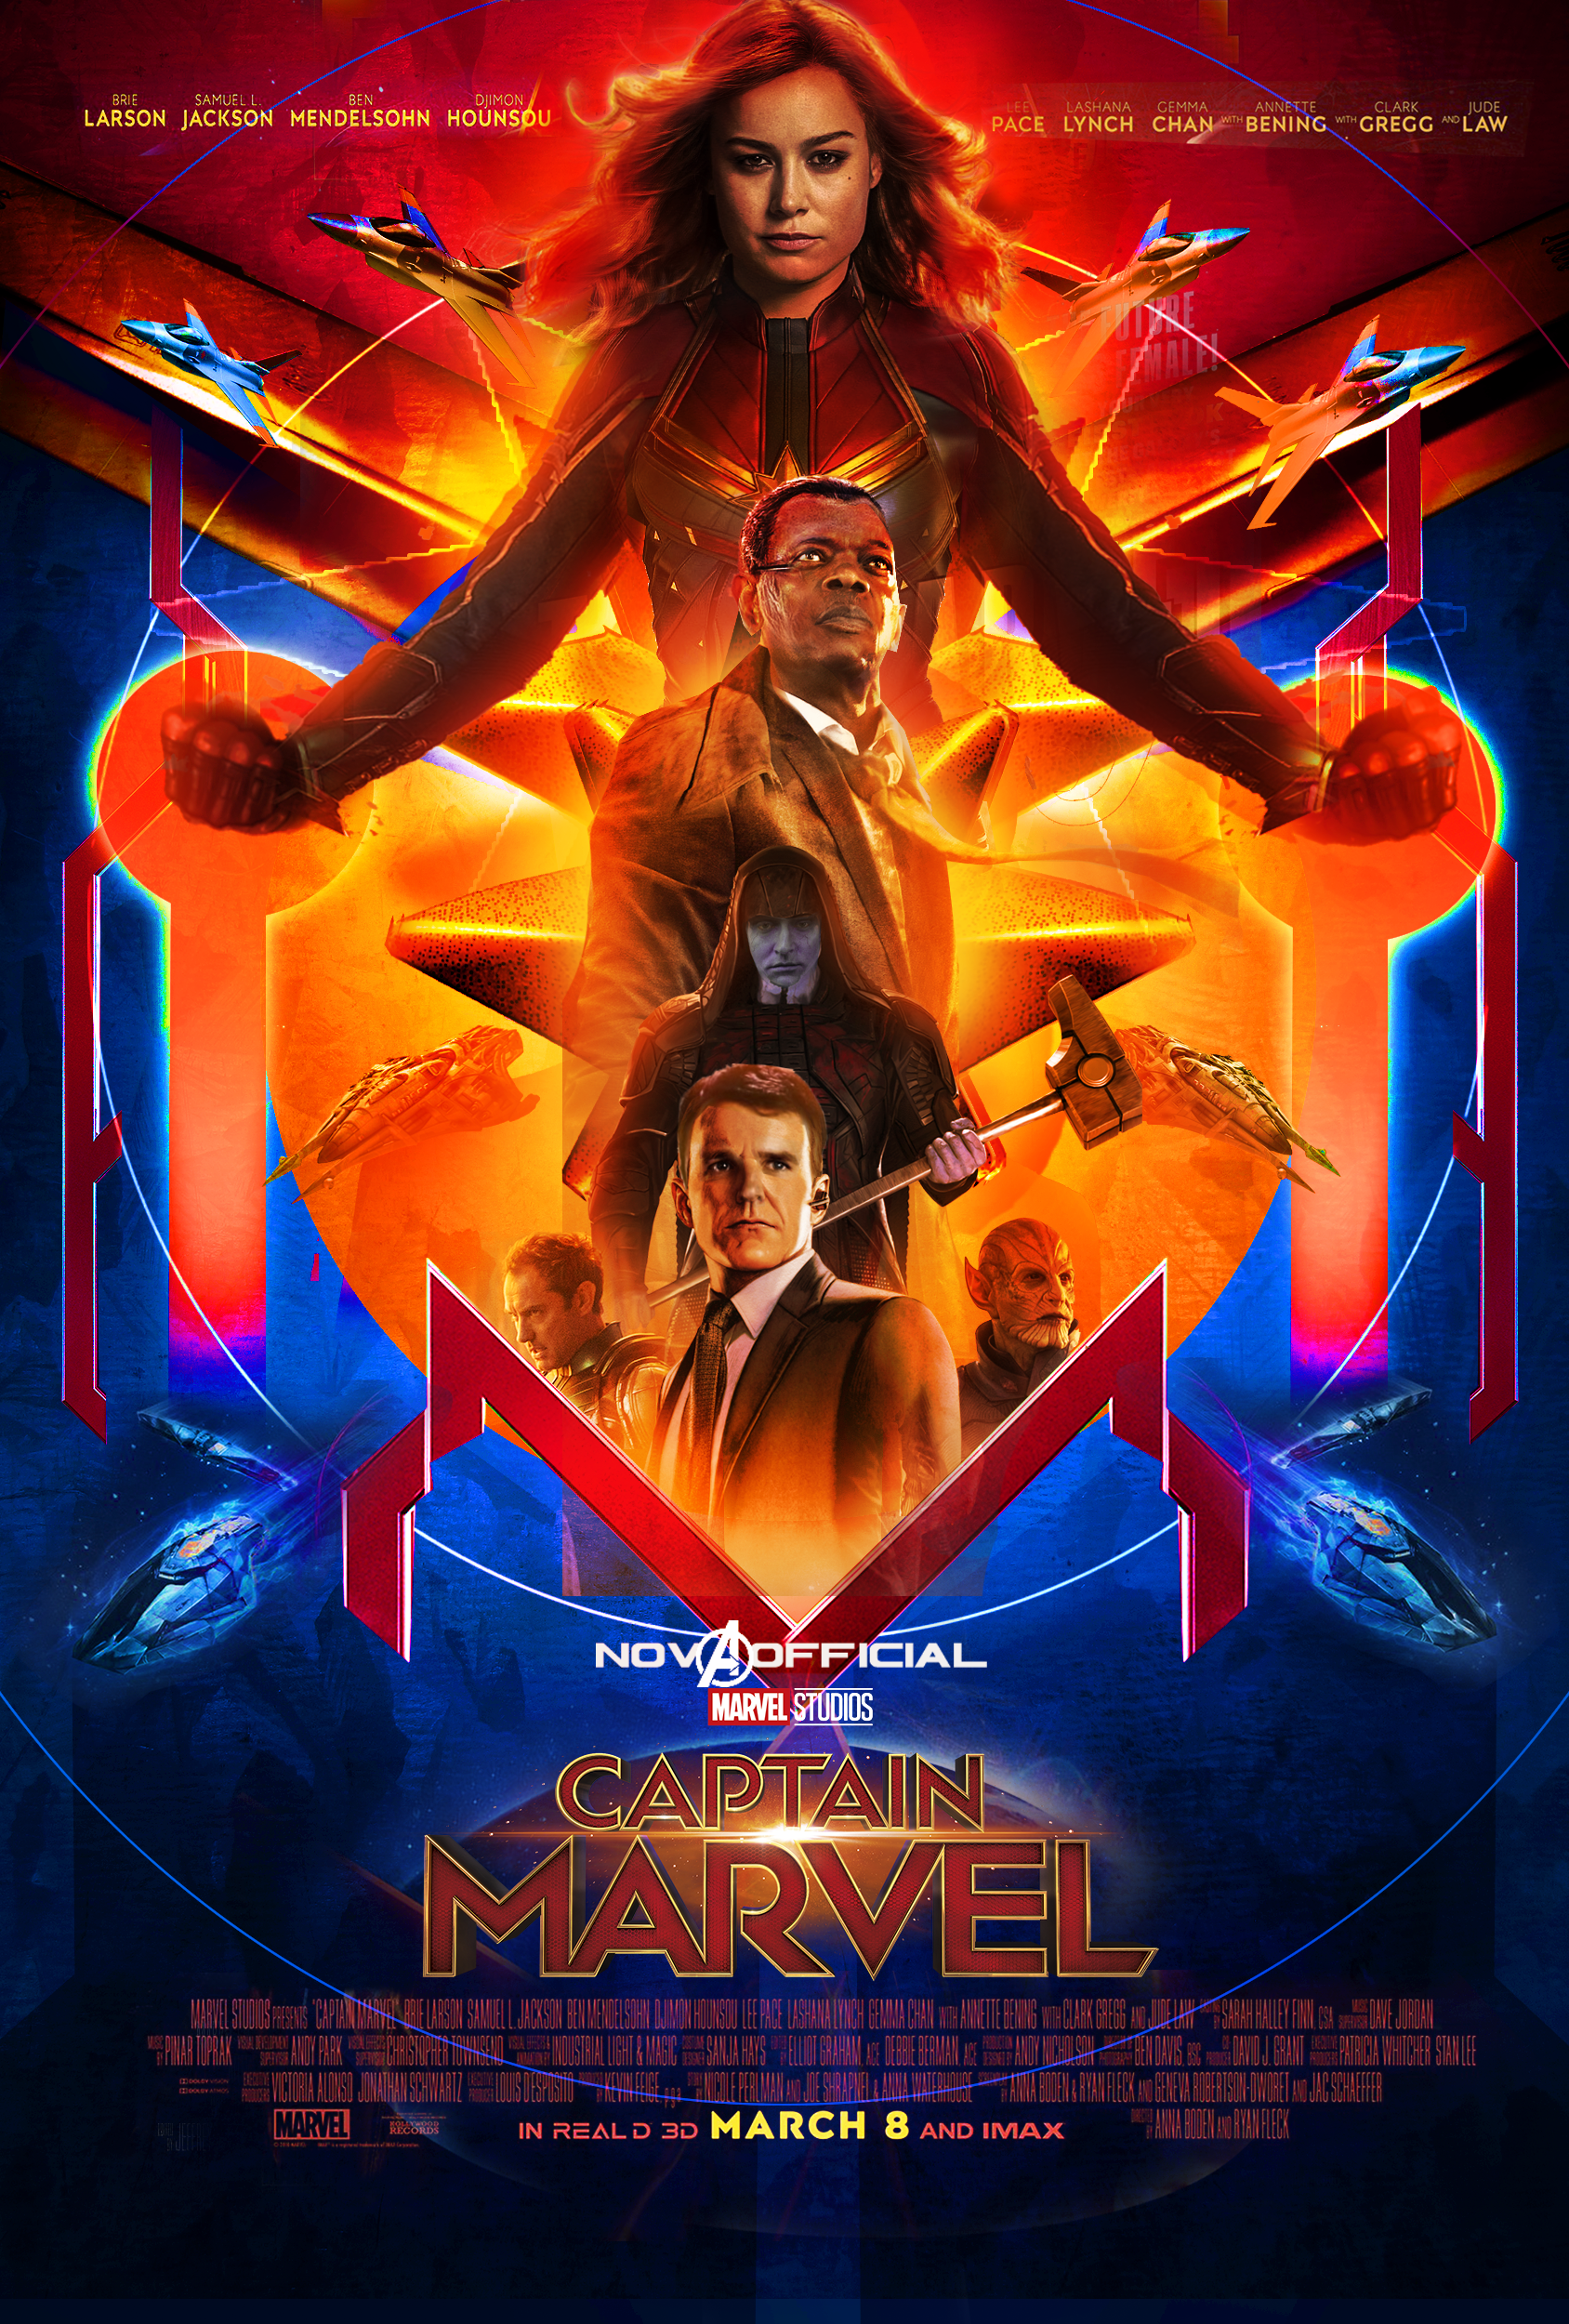 Captain Marvel Poster 2019 by iamtherealnova on DeviantArt